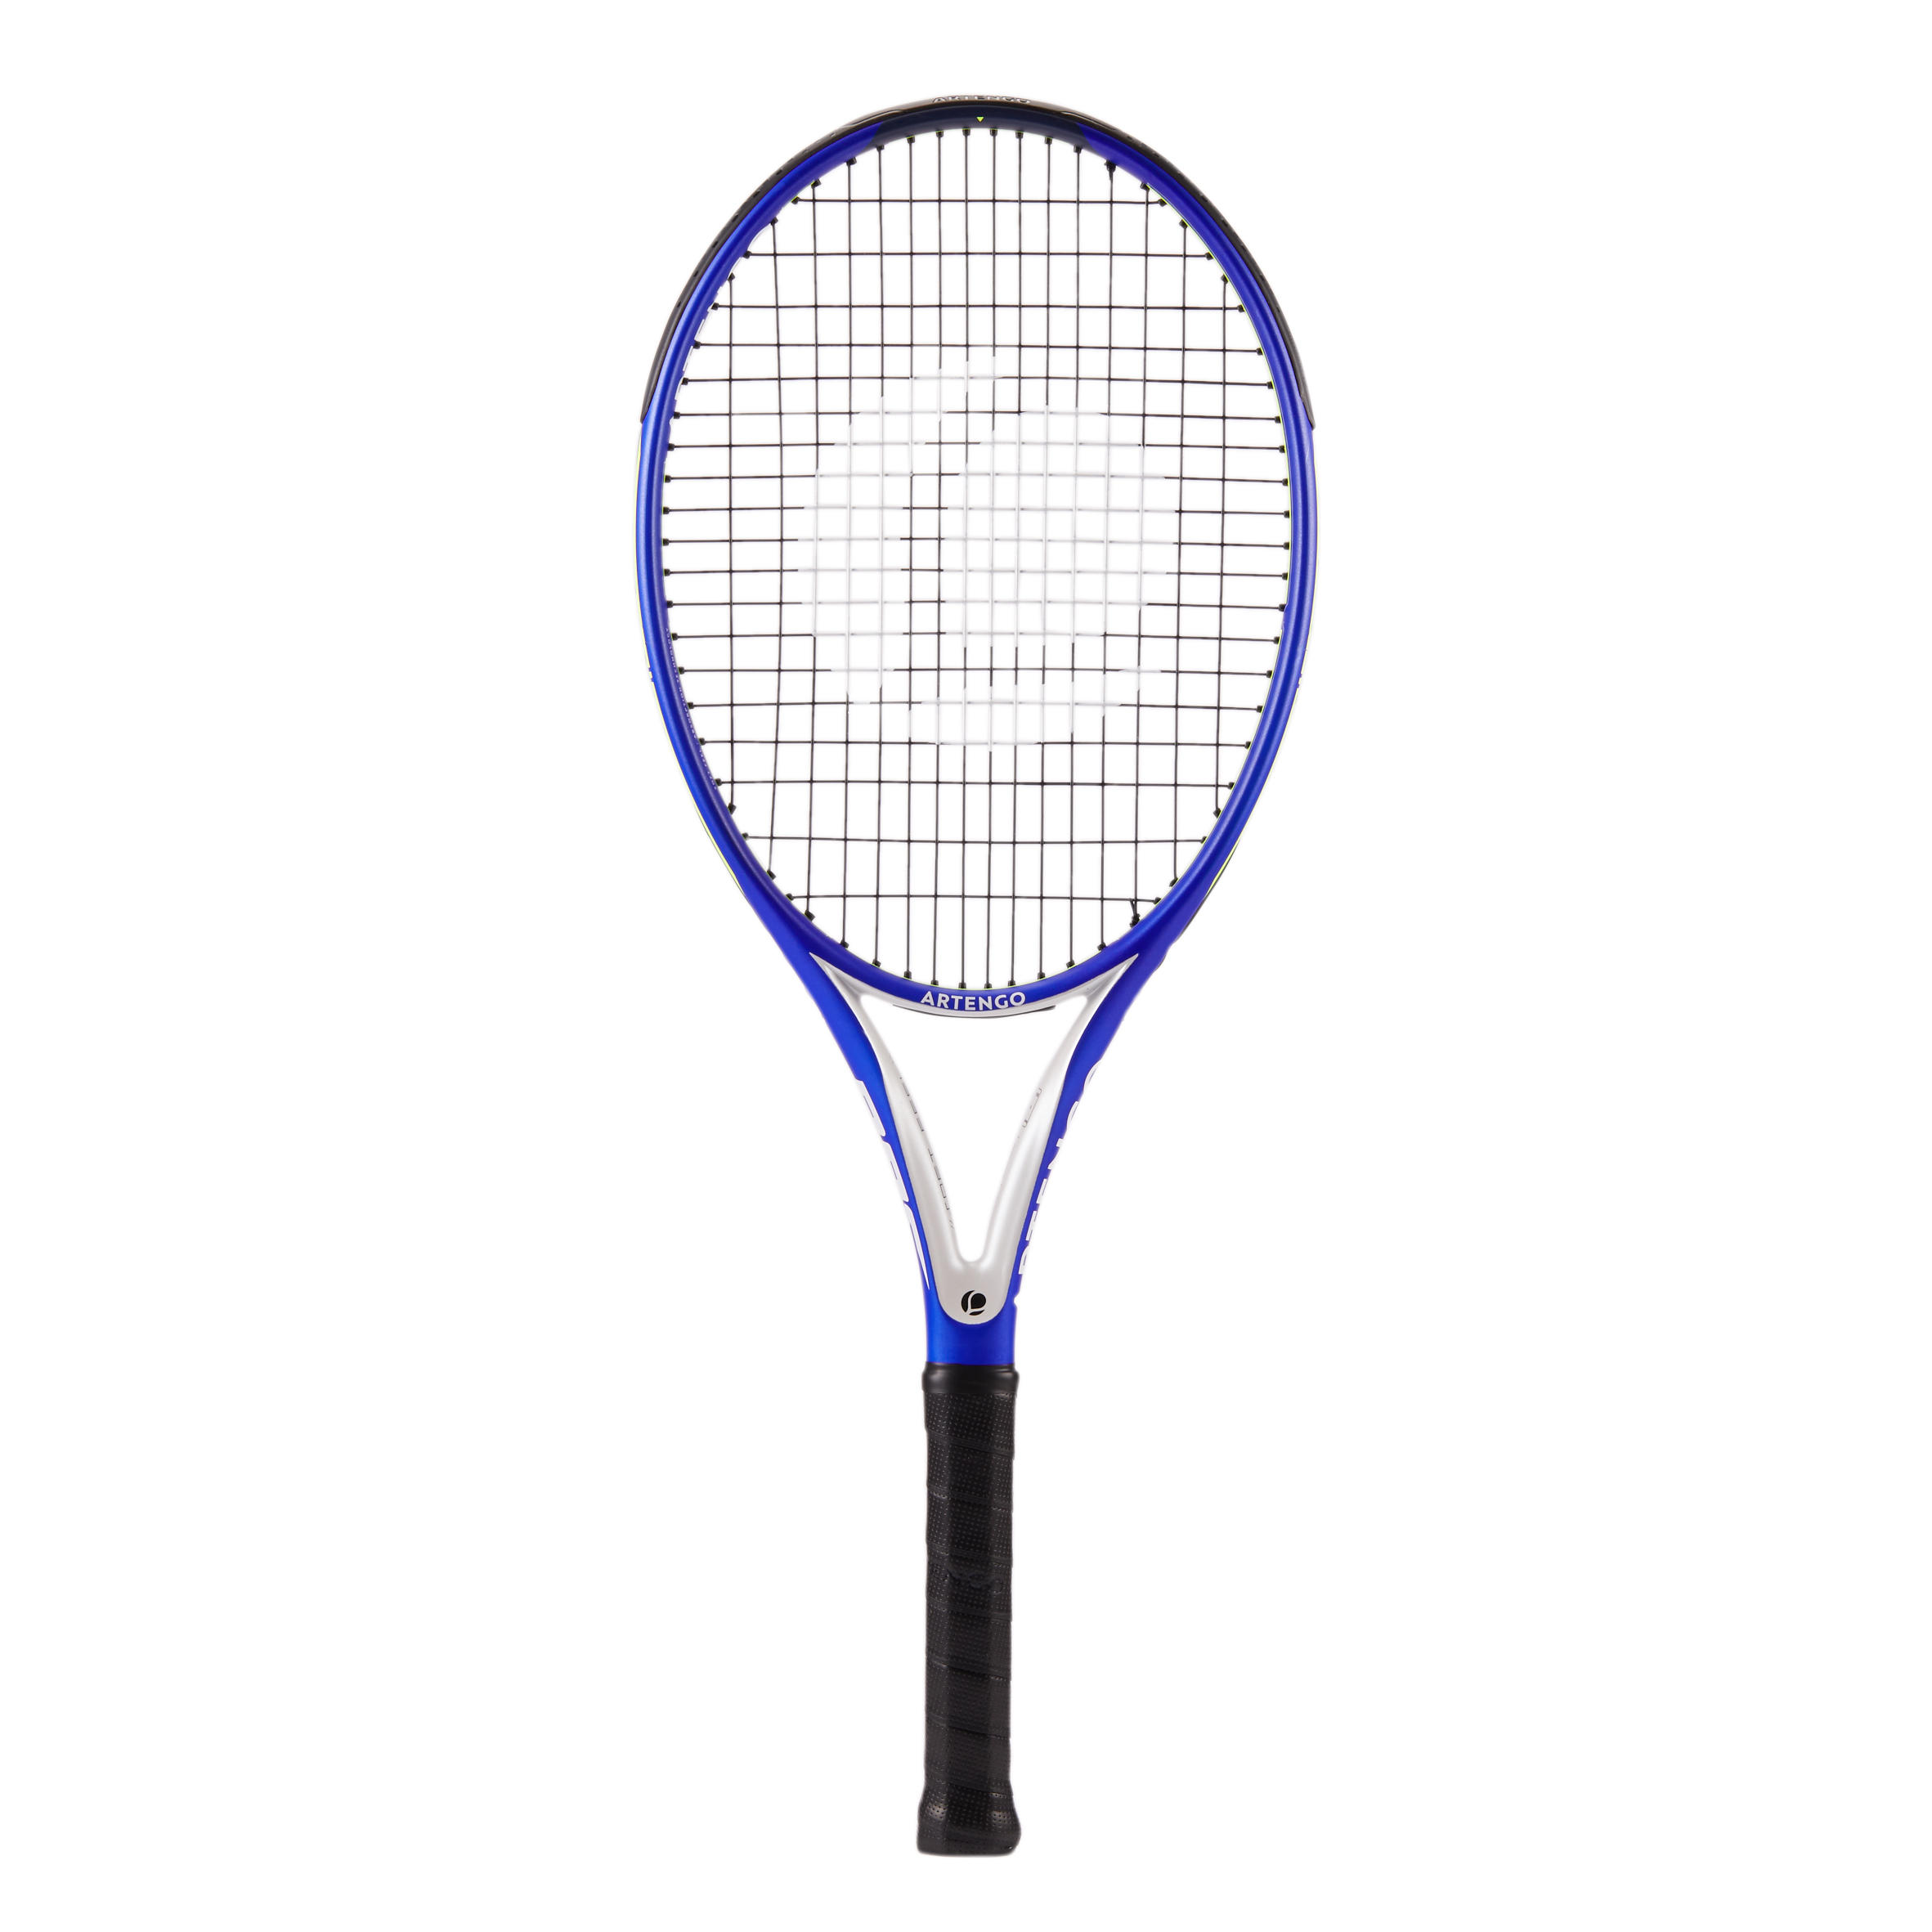 decathlon lawn tennis racket